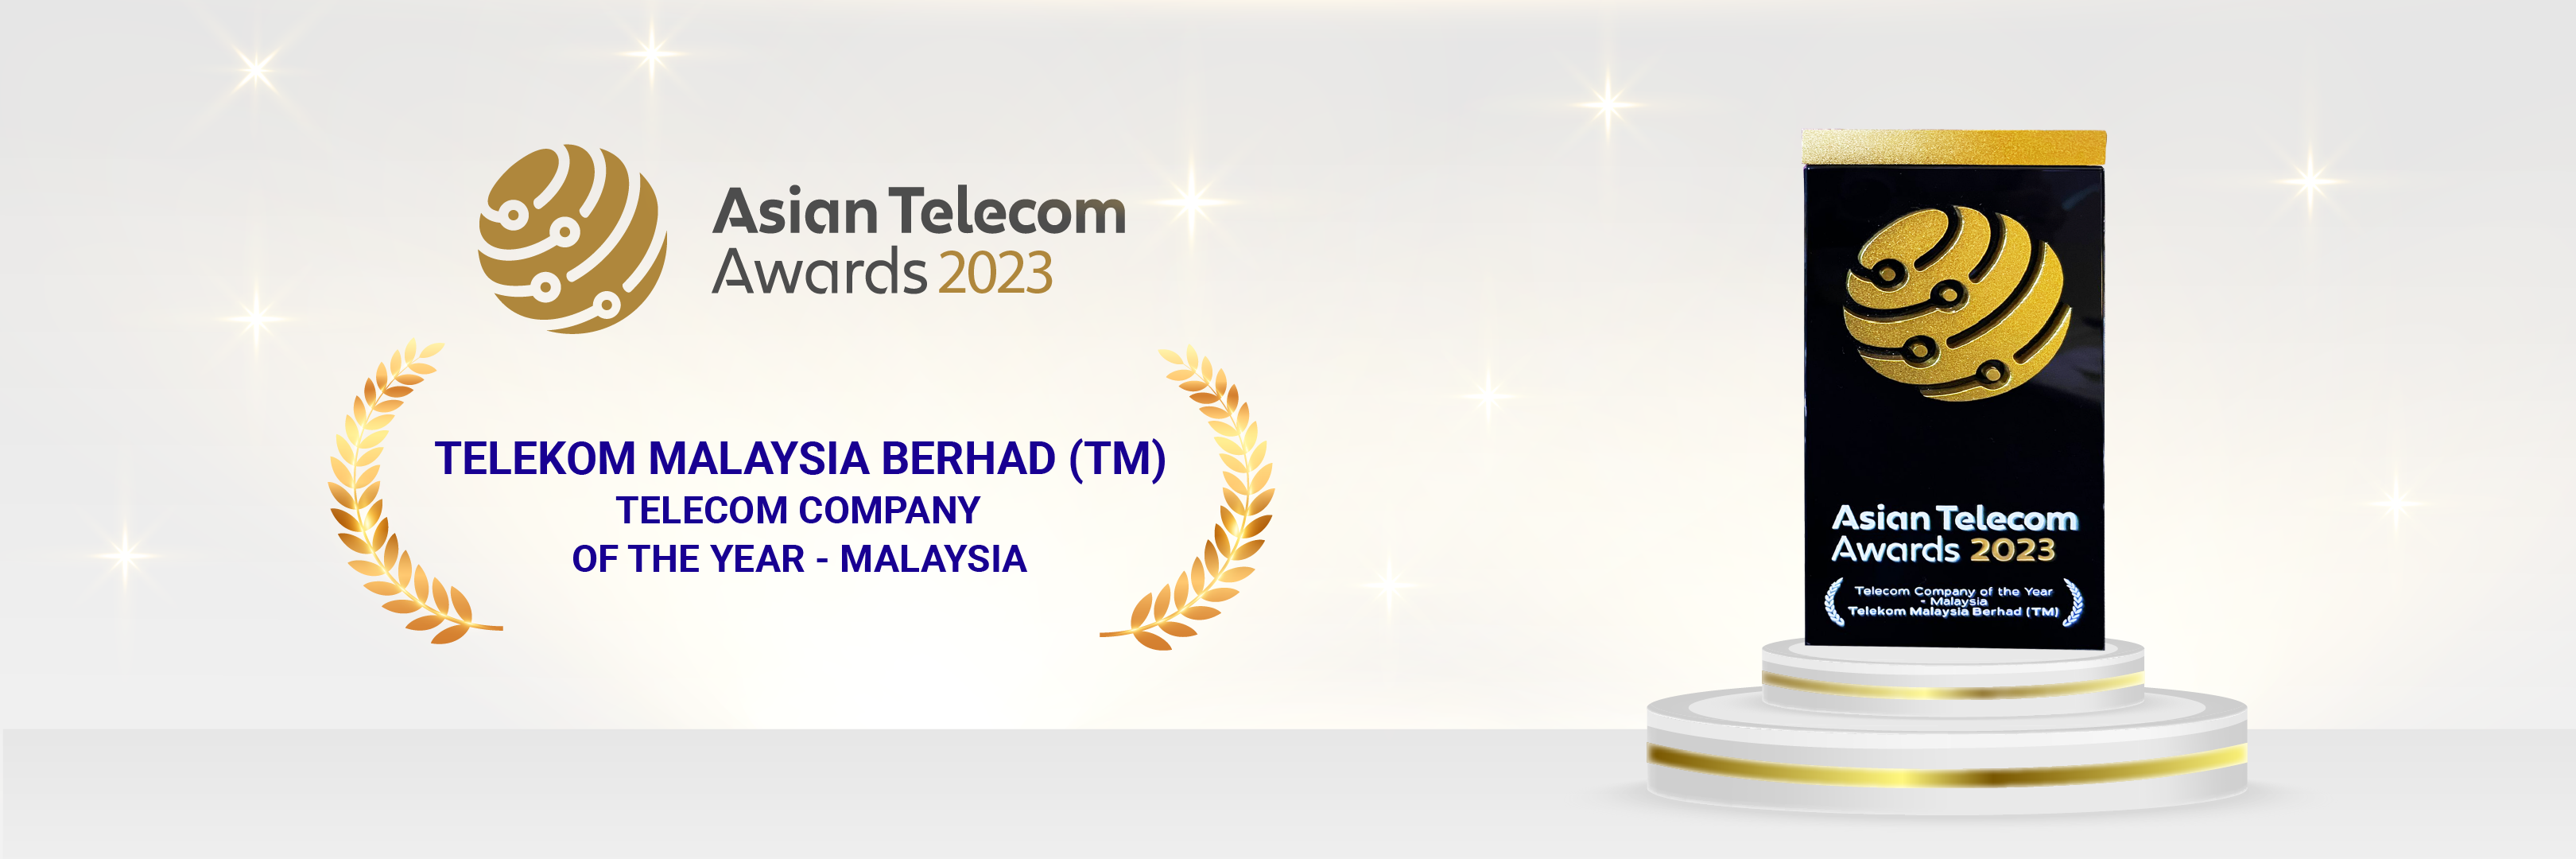 Asian-Telecom-Awards 2